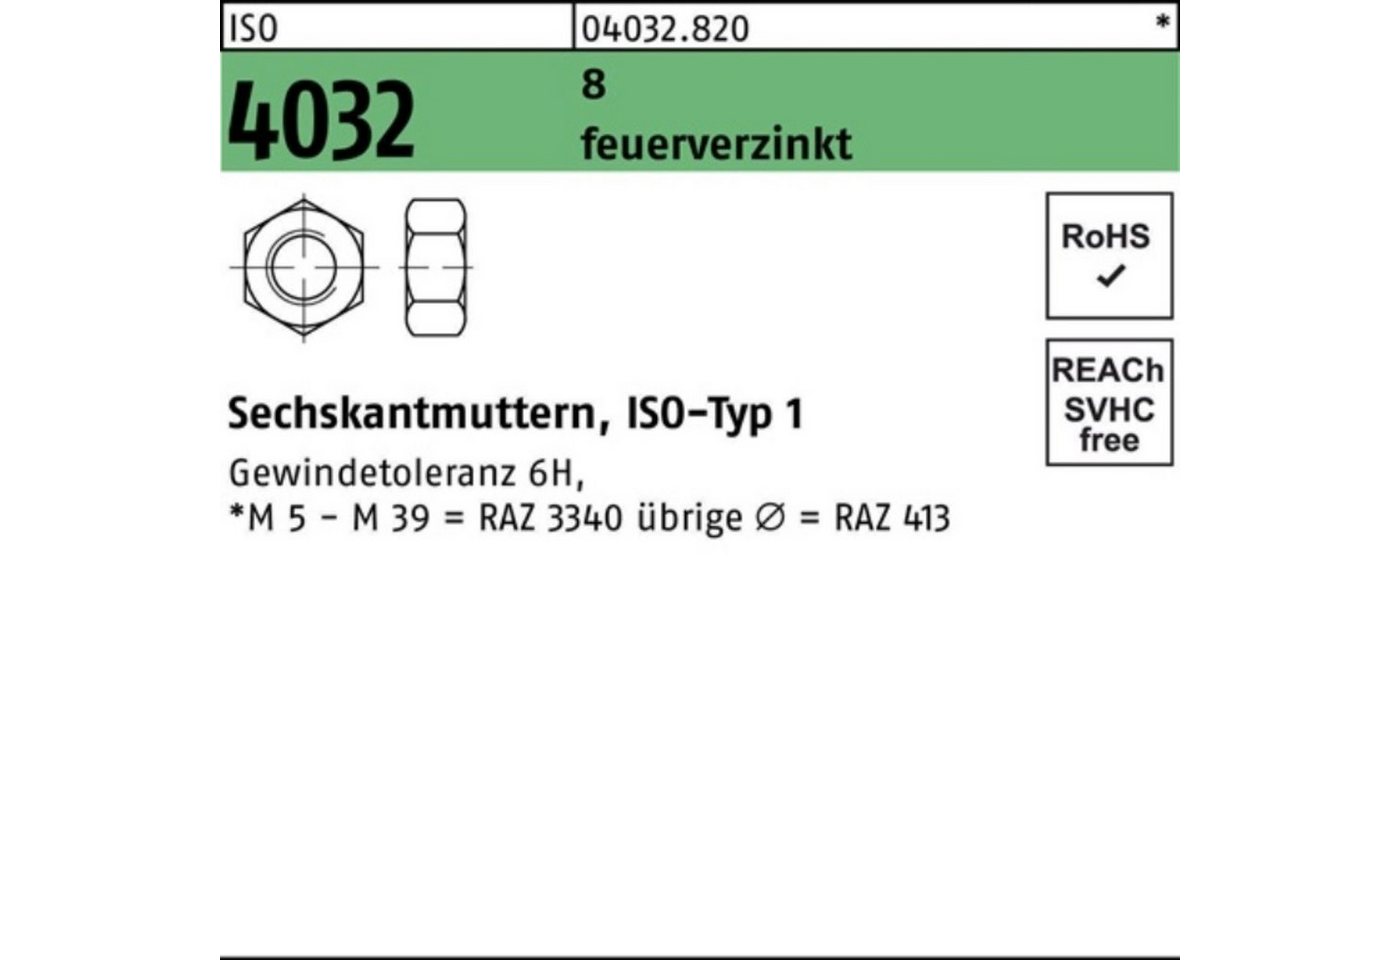 Bufab Muttern 100er Pack Sechskantmutter ISO 4032 M27 8 feuerverz. 25 Stück ISO 403 von Bufab